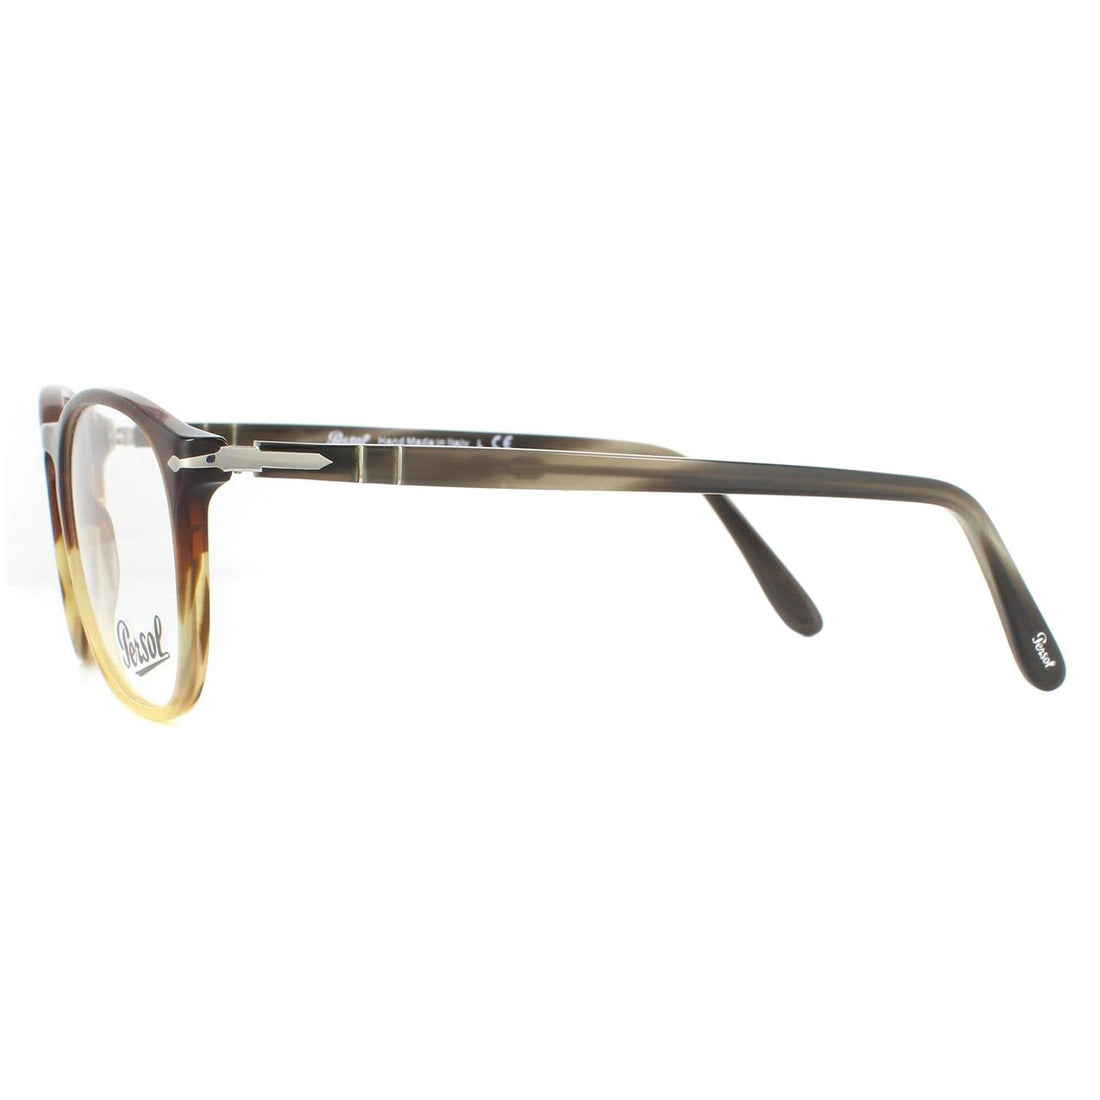 Persol Glasses Frames PO3007V 1136 Brown Striped Men